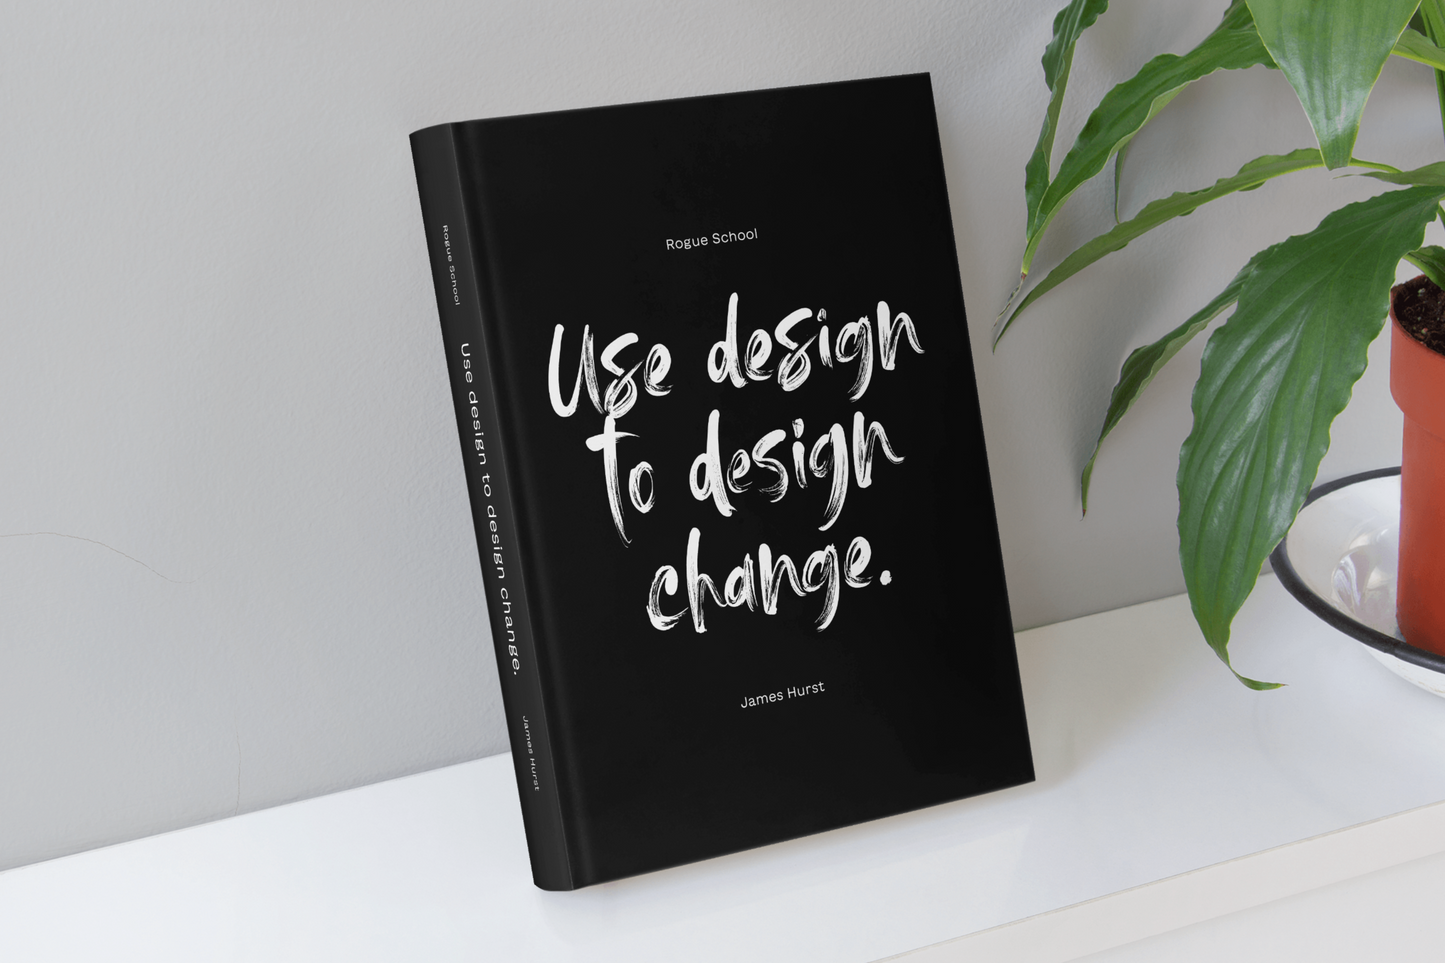 Use Design to Design Change